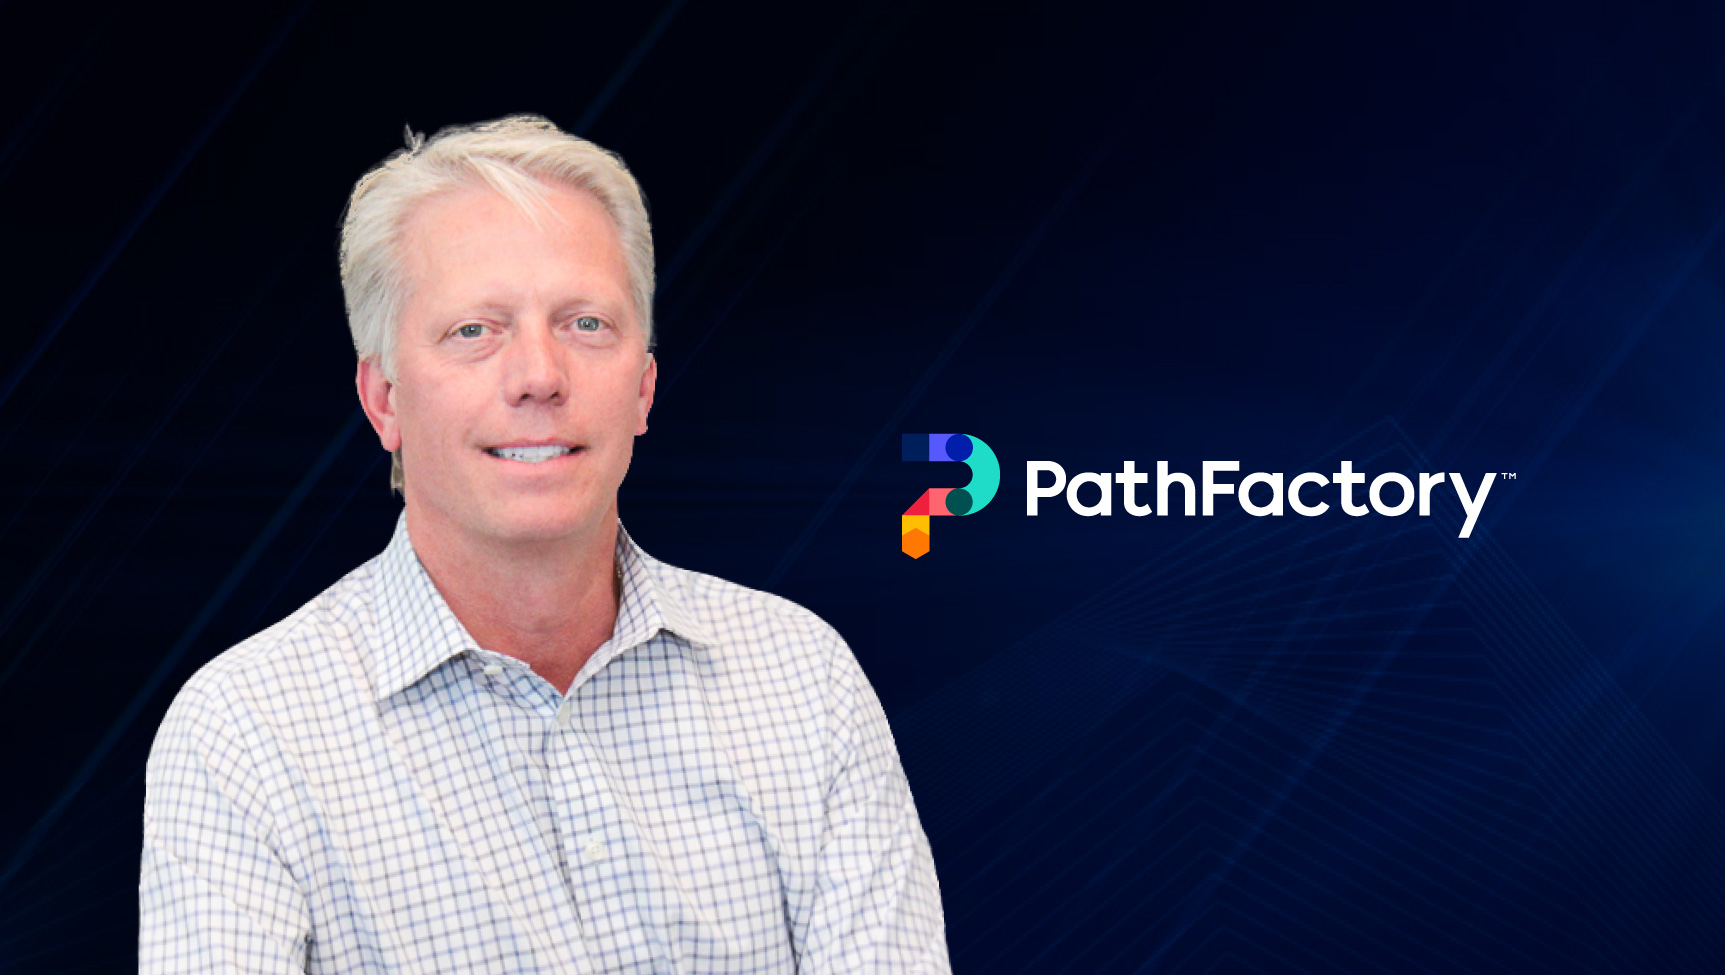 SalesTech Interview with Philip Kaszuba, SVP of Global Sales at PathFactory